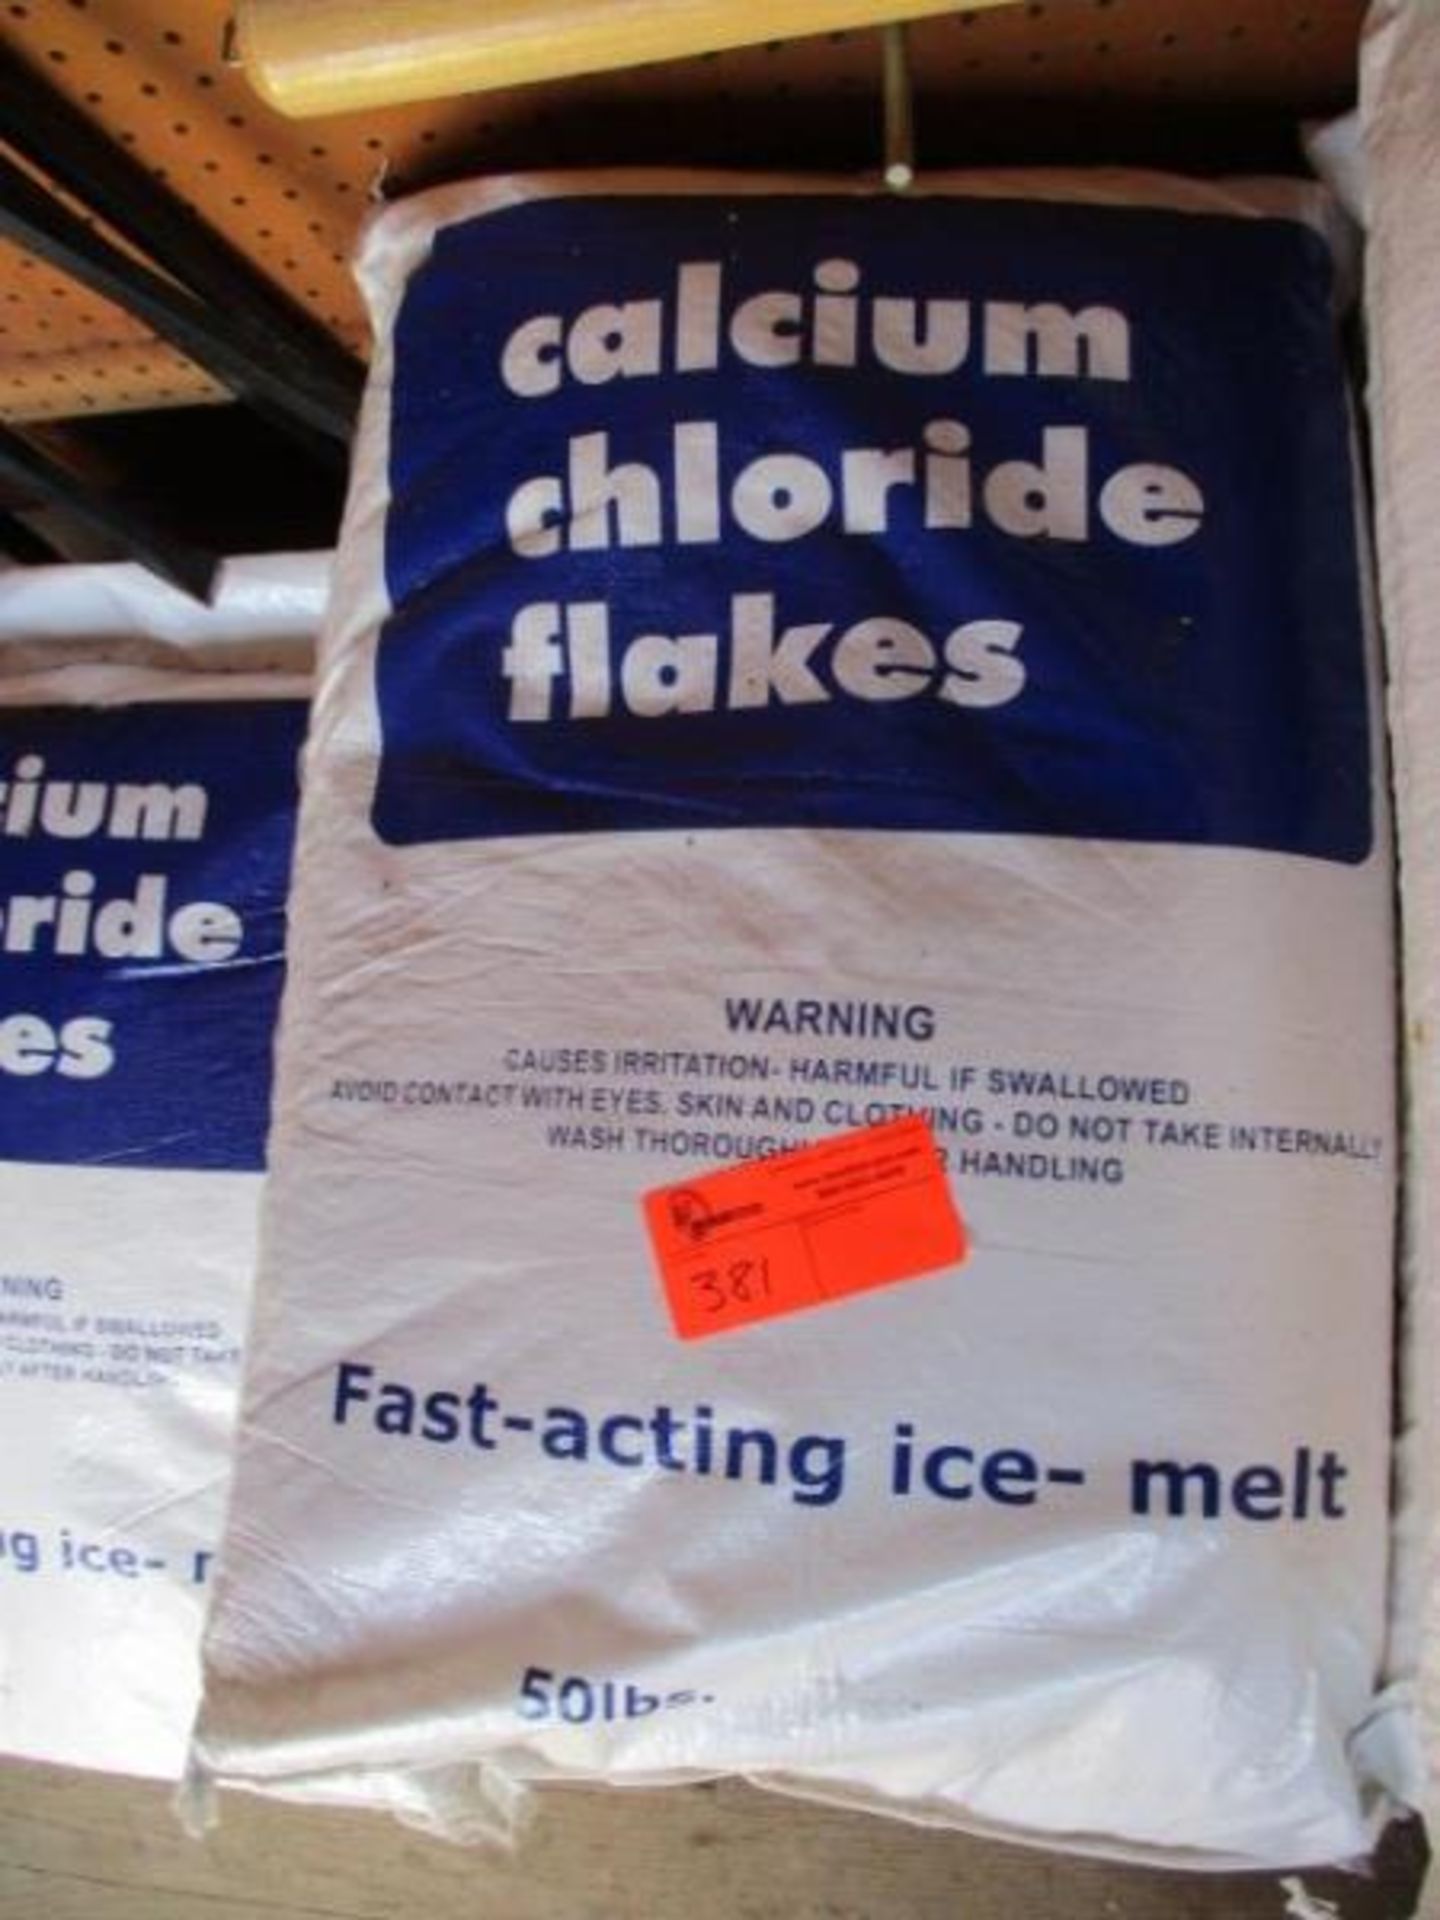 (14) Bags Calcium Chloride Flakes, 50 Lb. Bags - Image 6 of 6